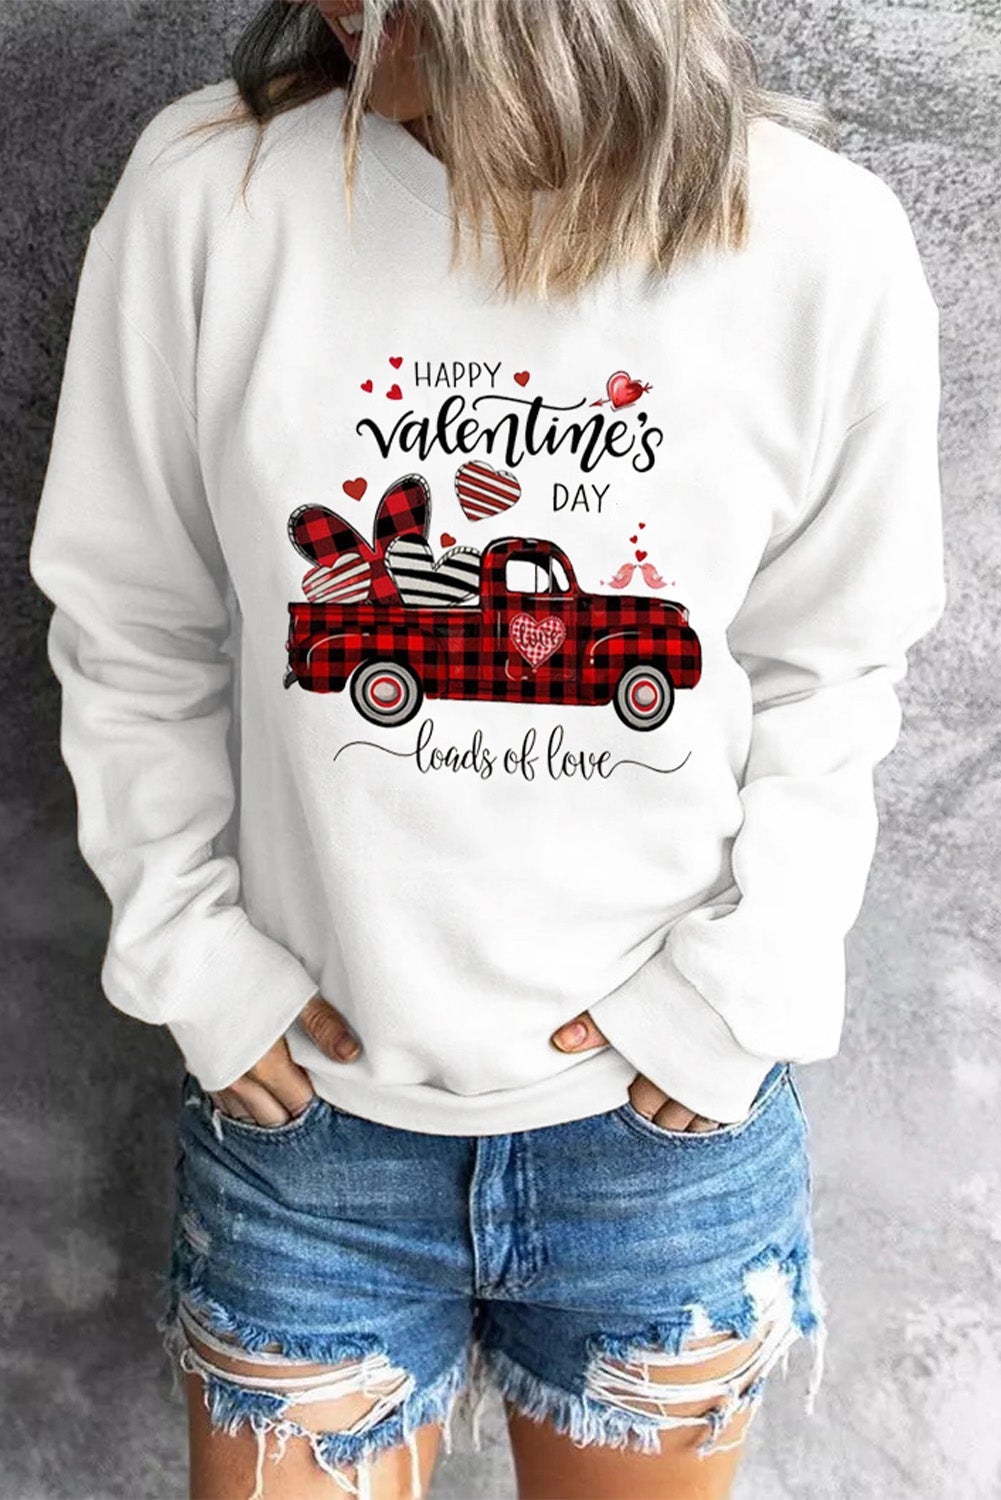 HAPPY Valentine's DAY Loads of Love Plaid Truck Print Sweatshirt